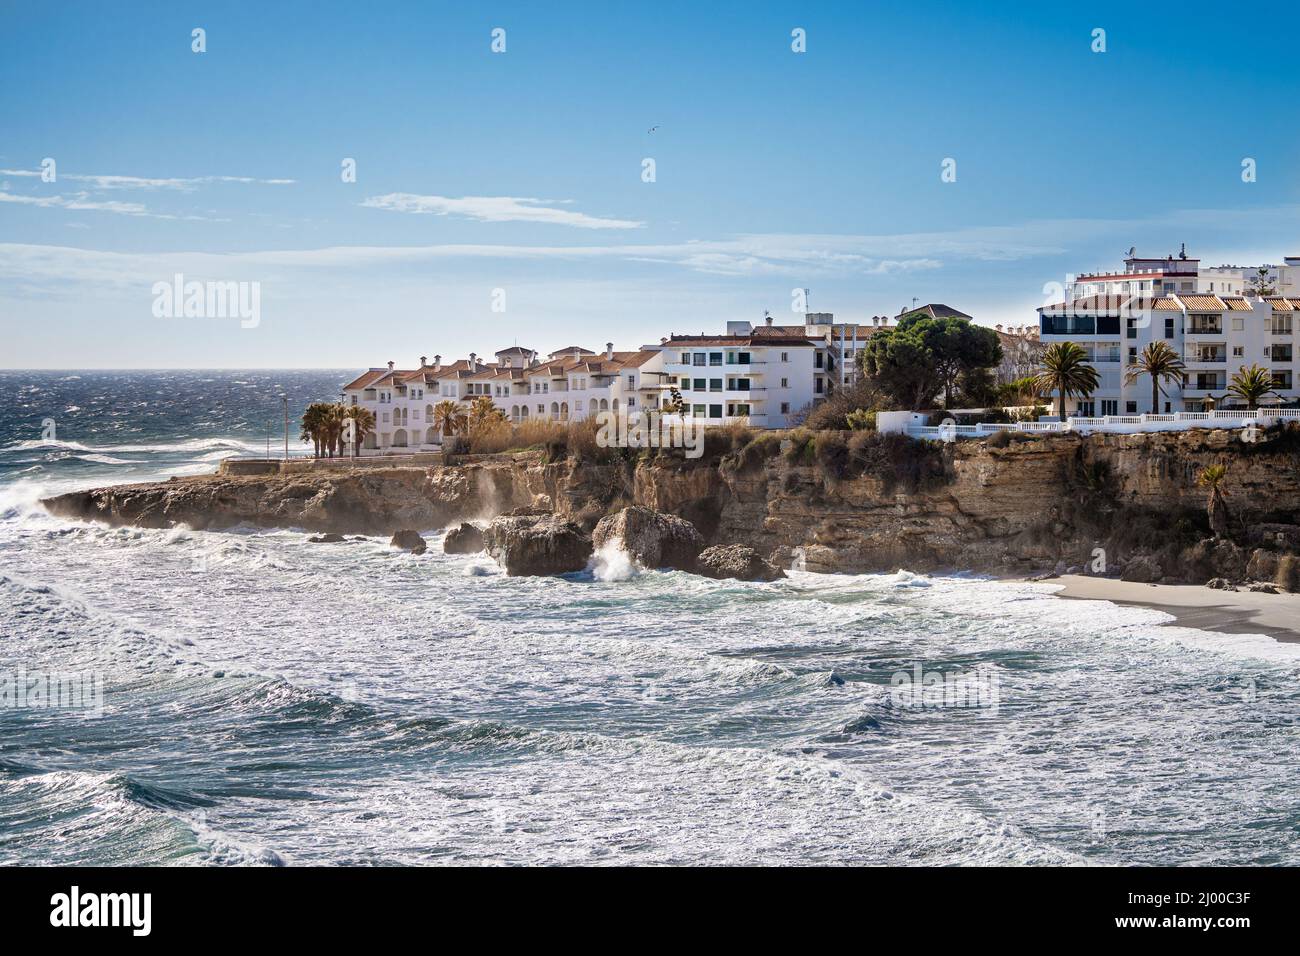 View of El Salon Beach in Nerja City - Malaga - Costa del Sol. View from 'Balcon de Europa'. Beautiful landscape in south of Spain. Stock Photo